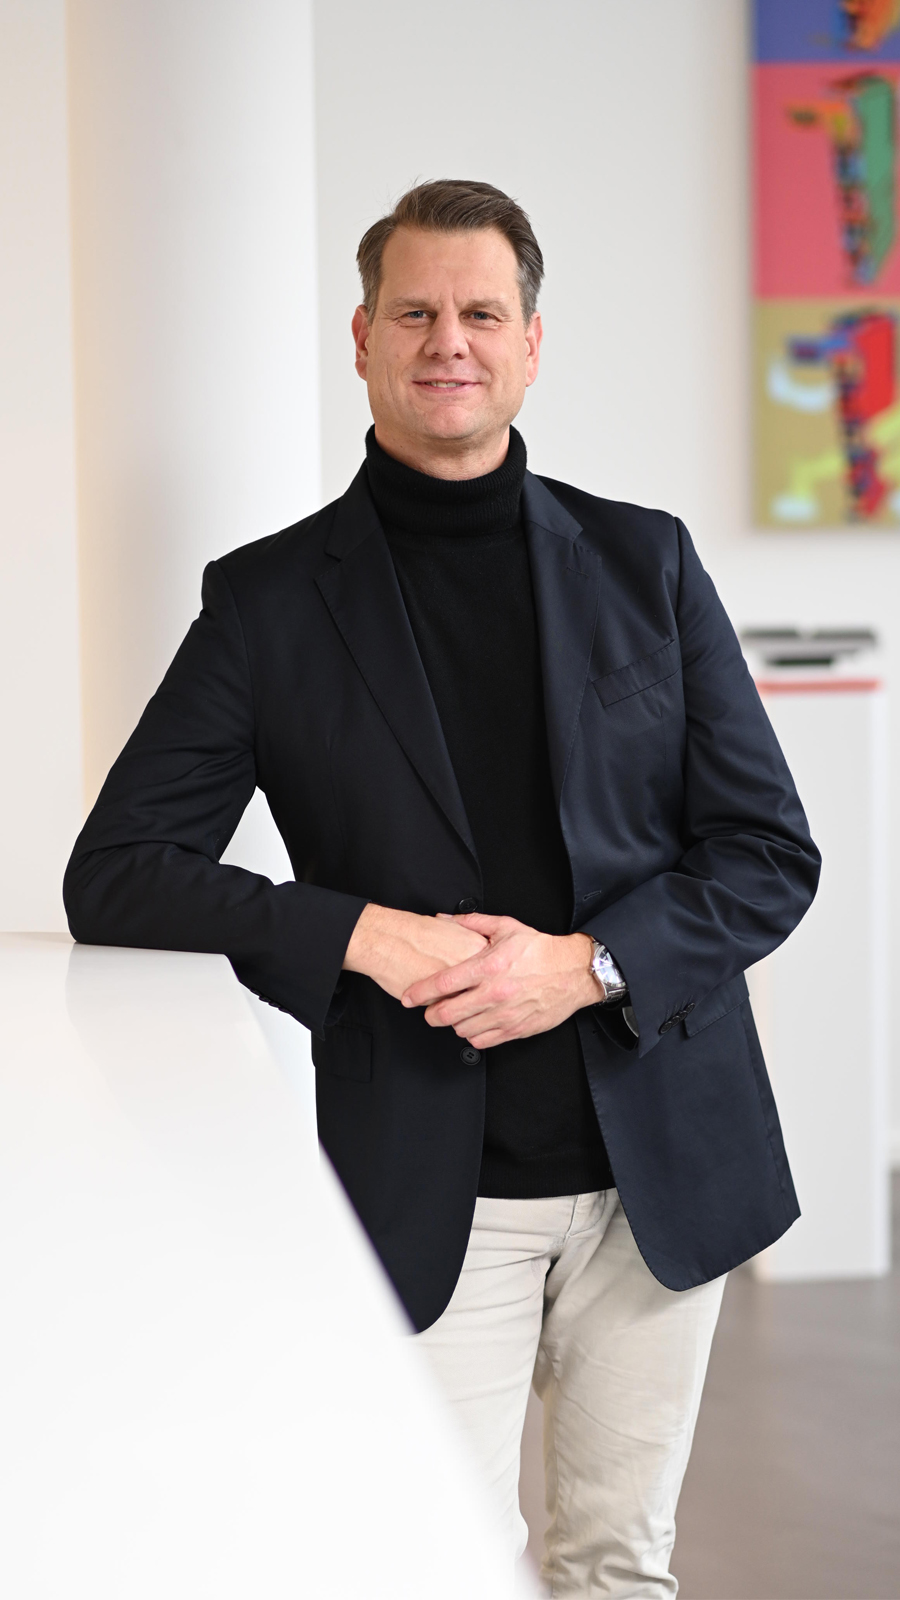 Jörg Rottkord, Automotive Industry Manager, Beckhoff Automation